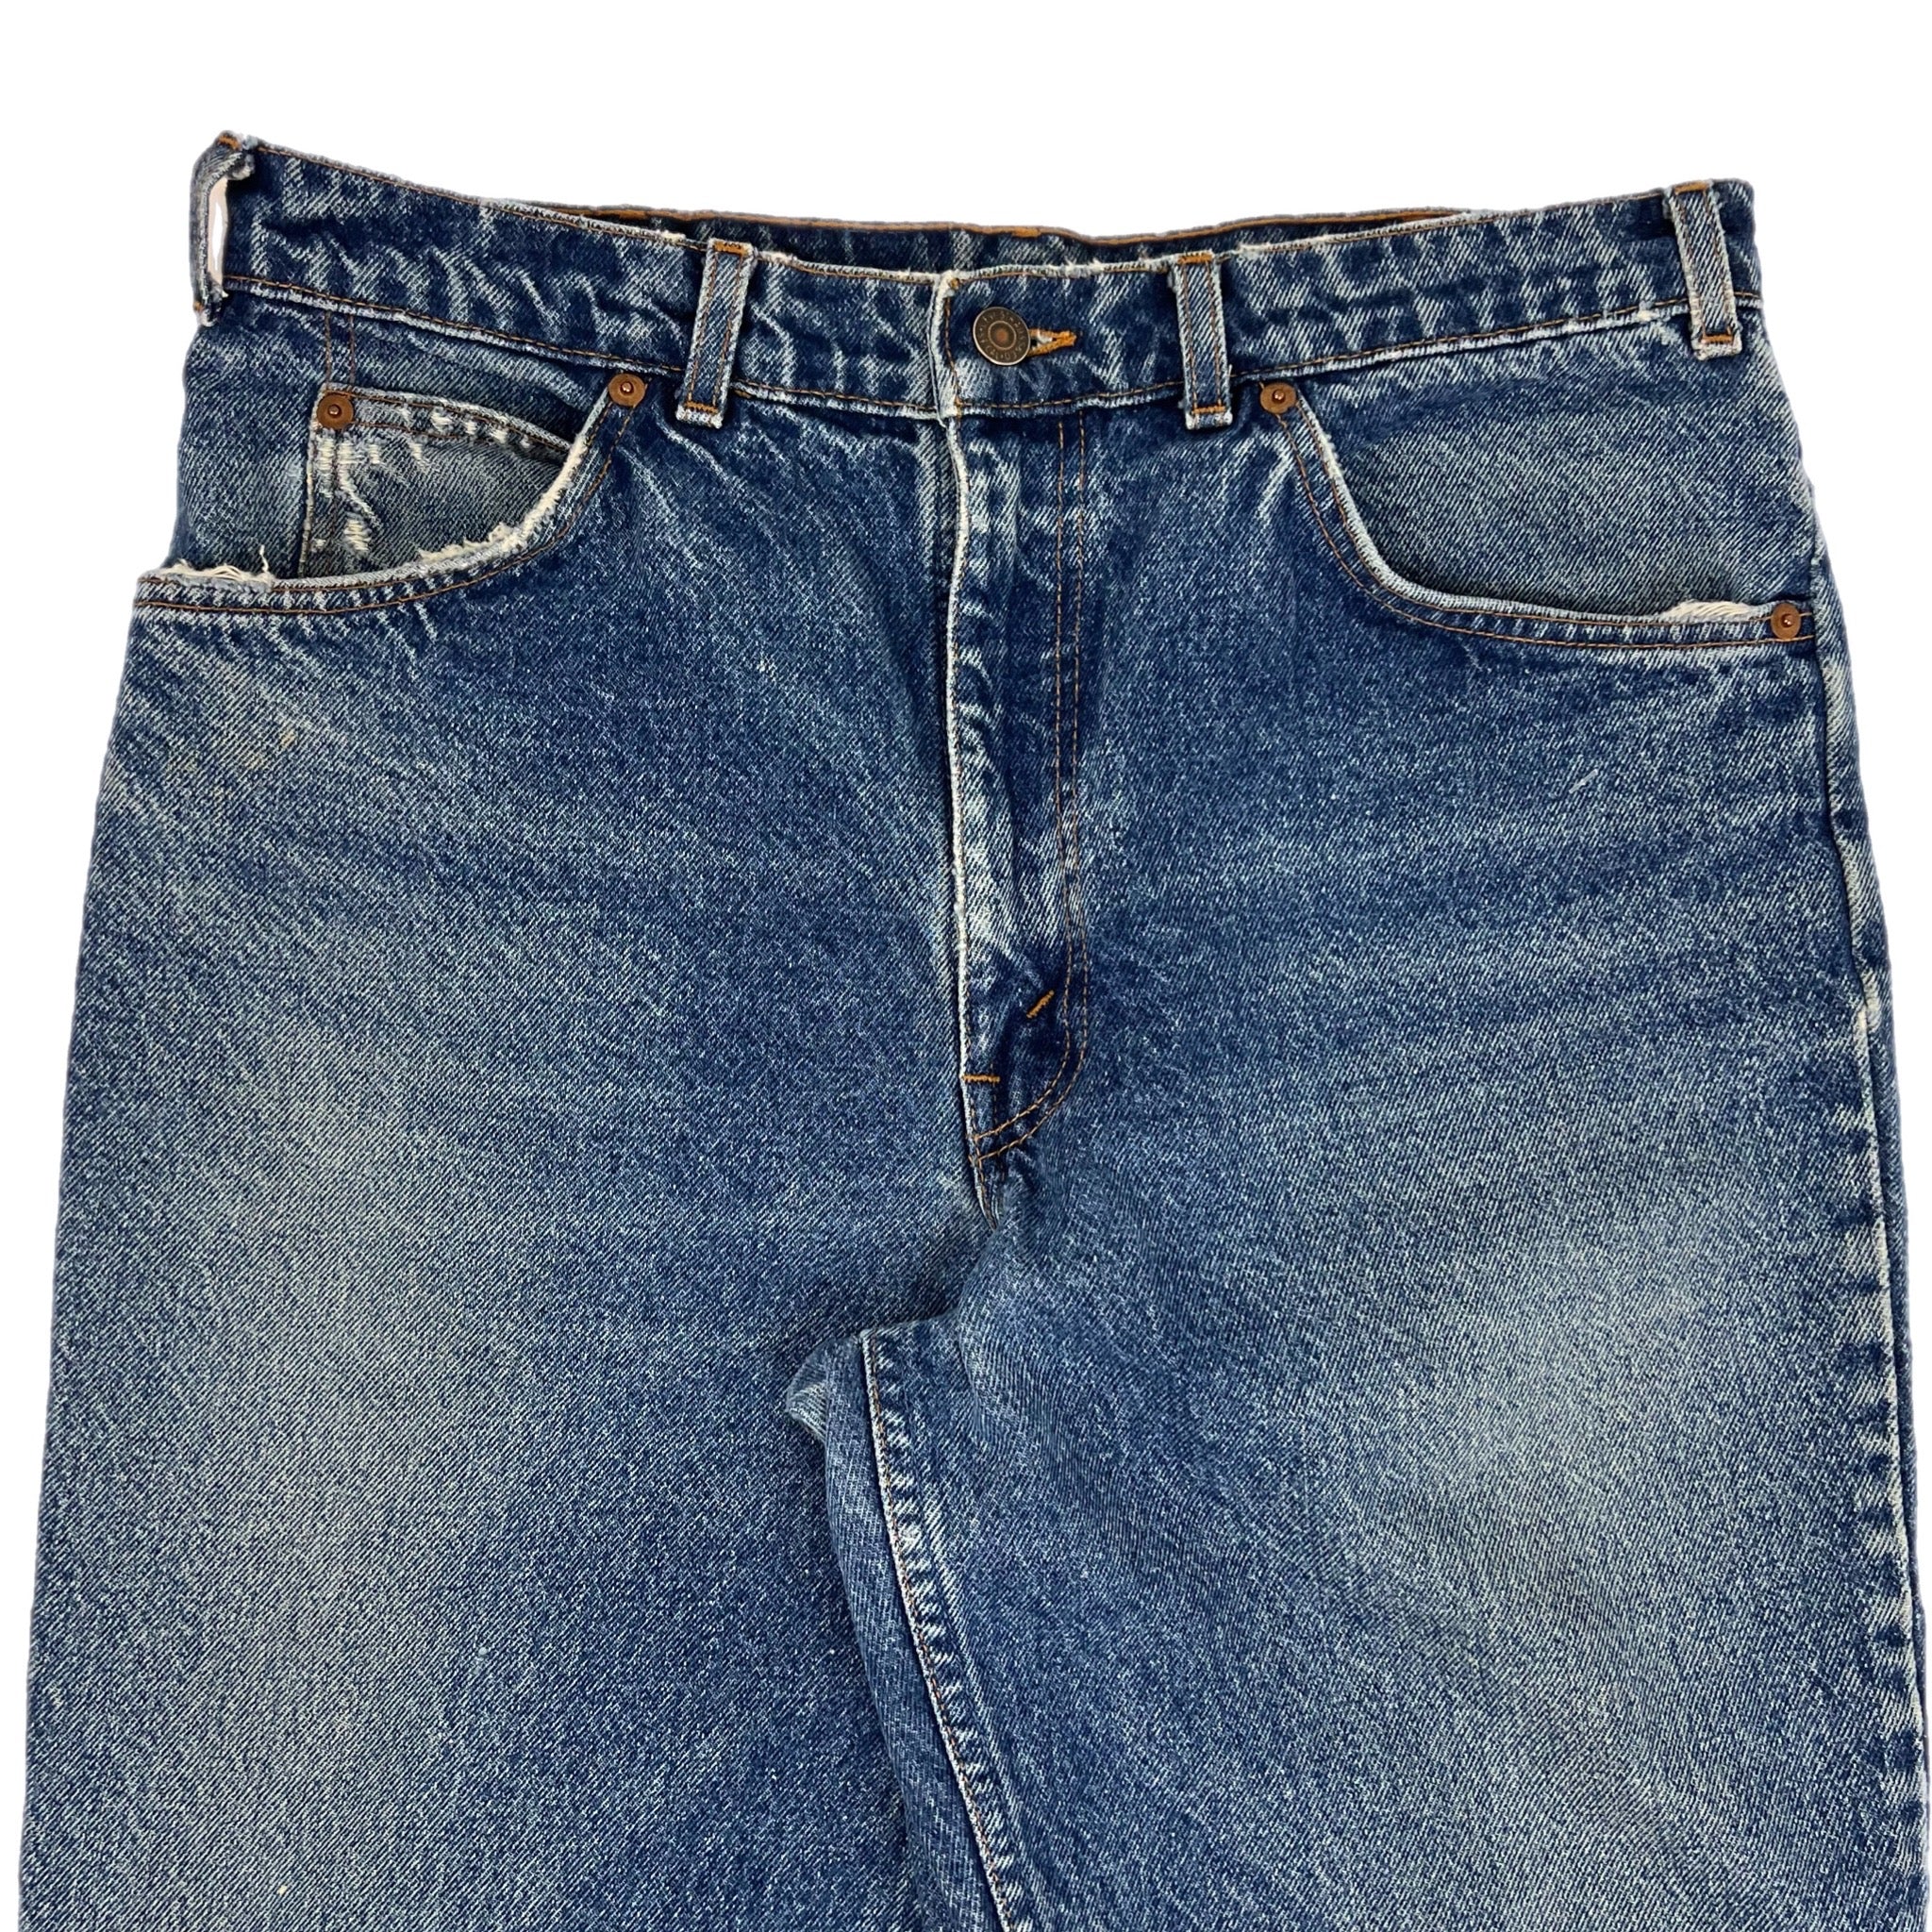 Vintage Levi’s Orange Tab Denim - Classic Blue Jeans